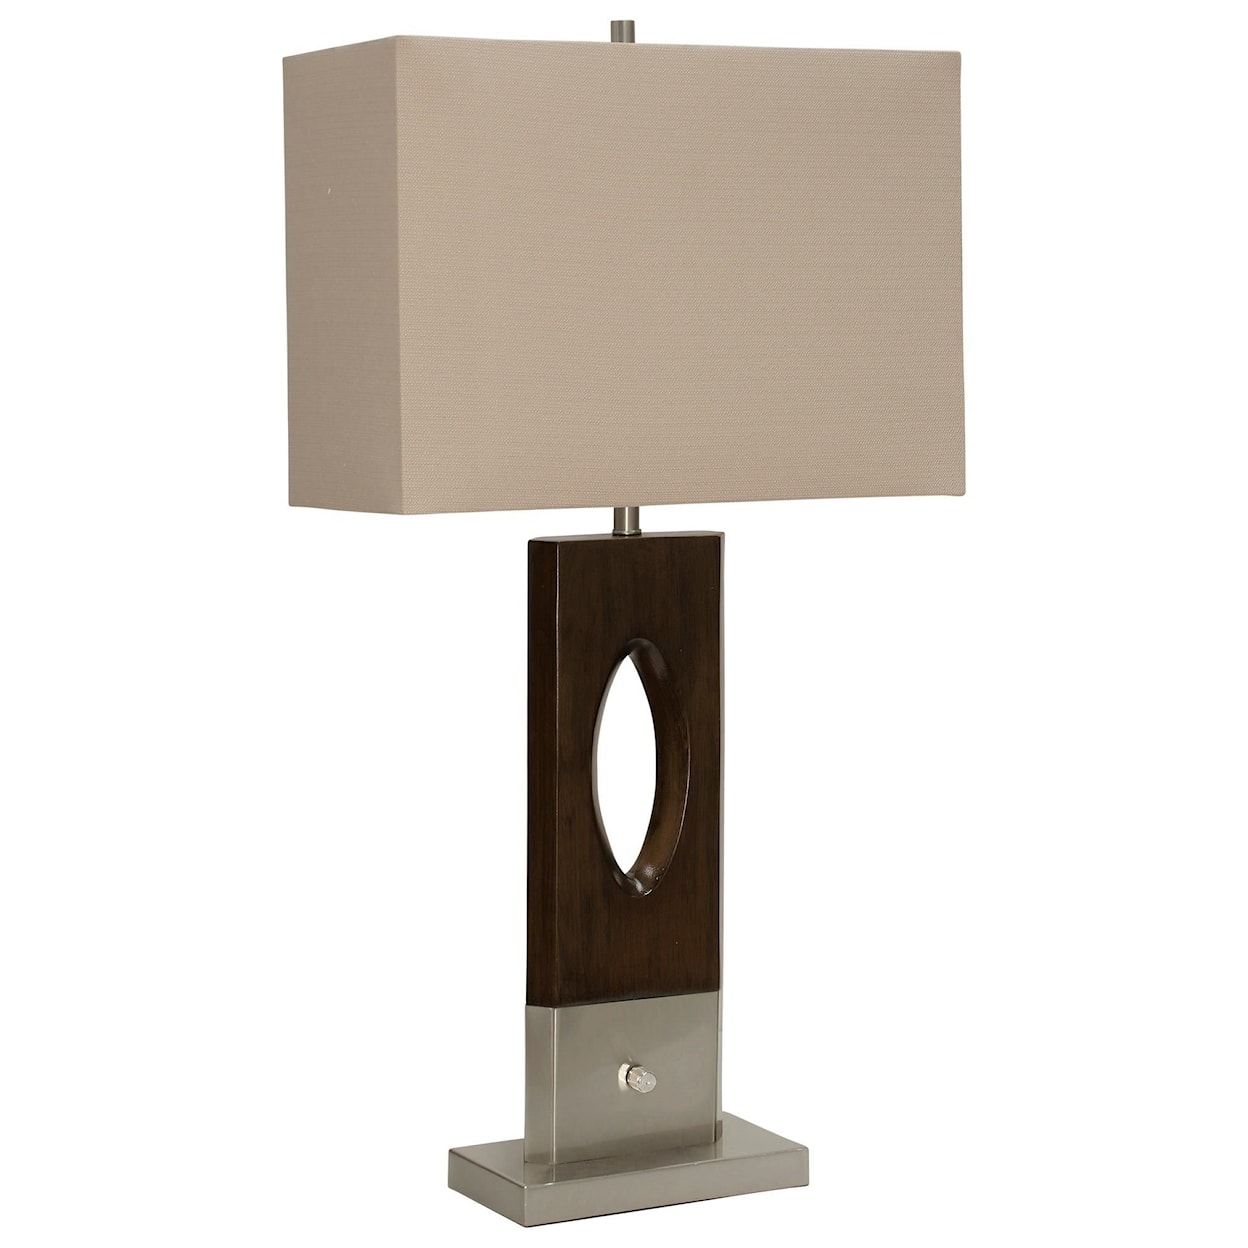 StyleCraft WoodBridge 1 Table Lamp